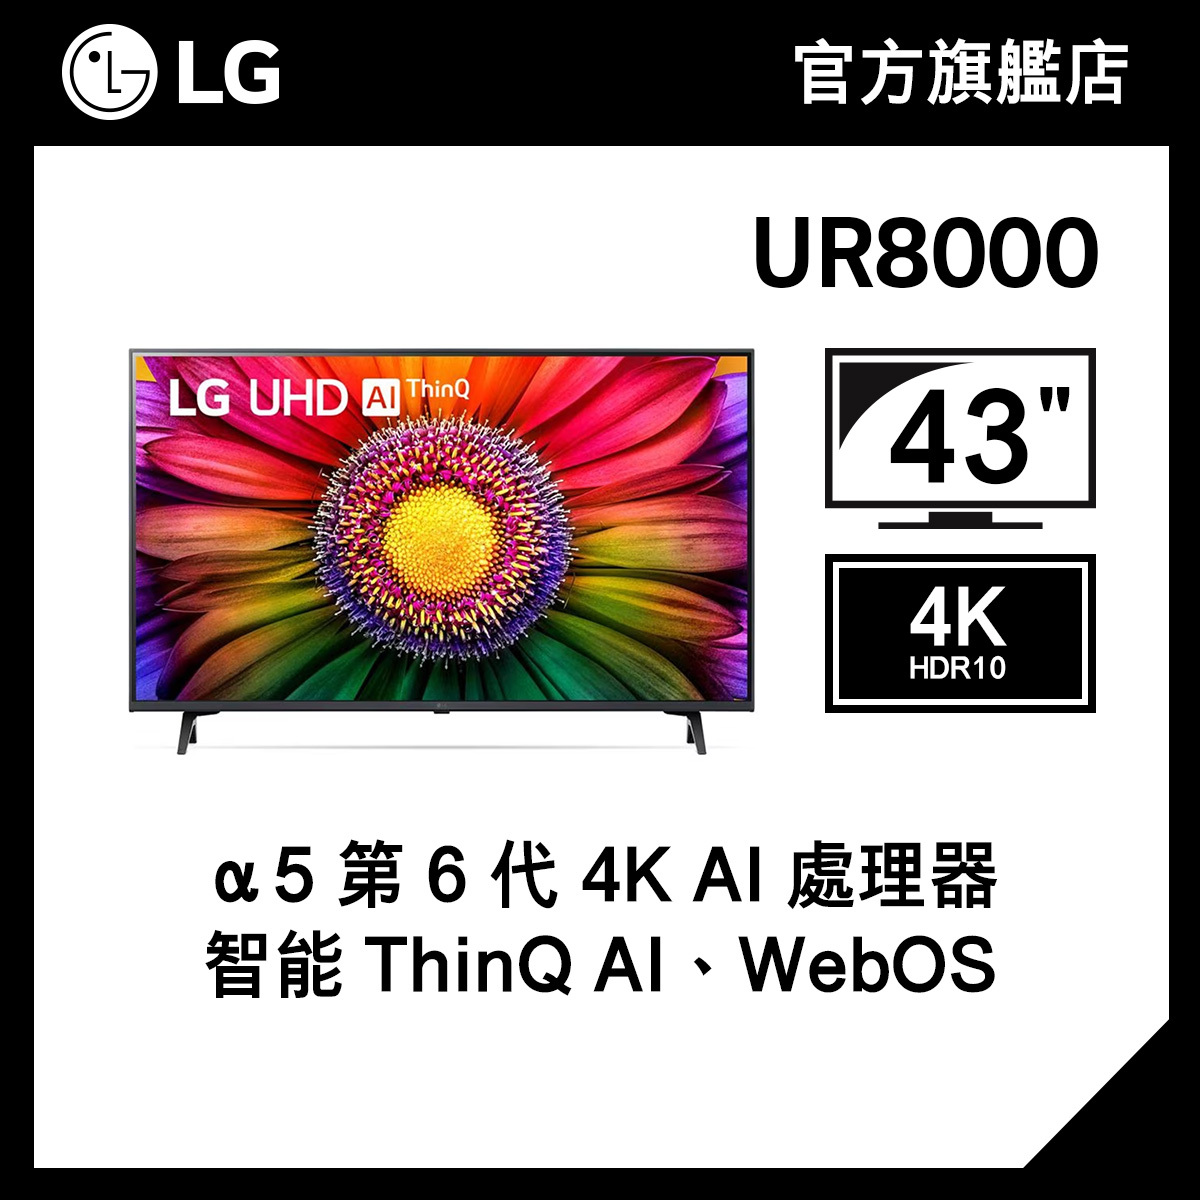 LG 43" UHD 4K 智能電視 UR8000